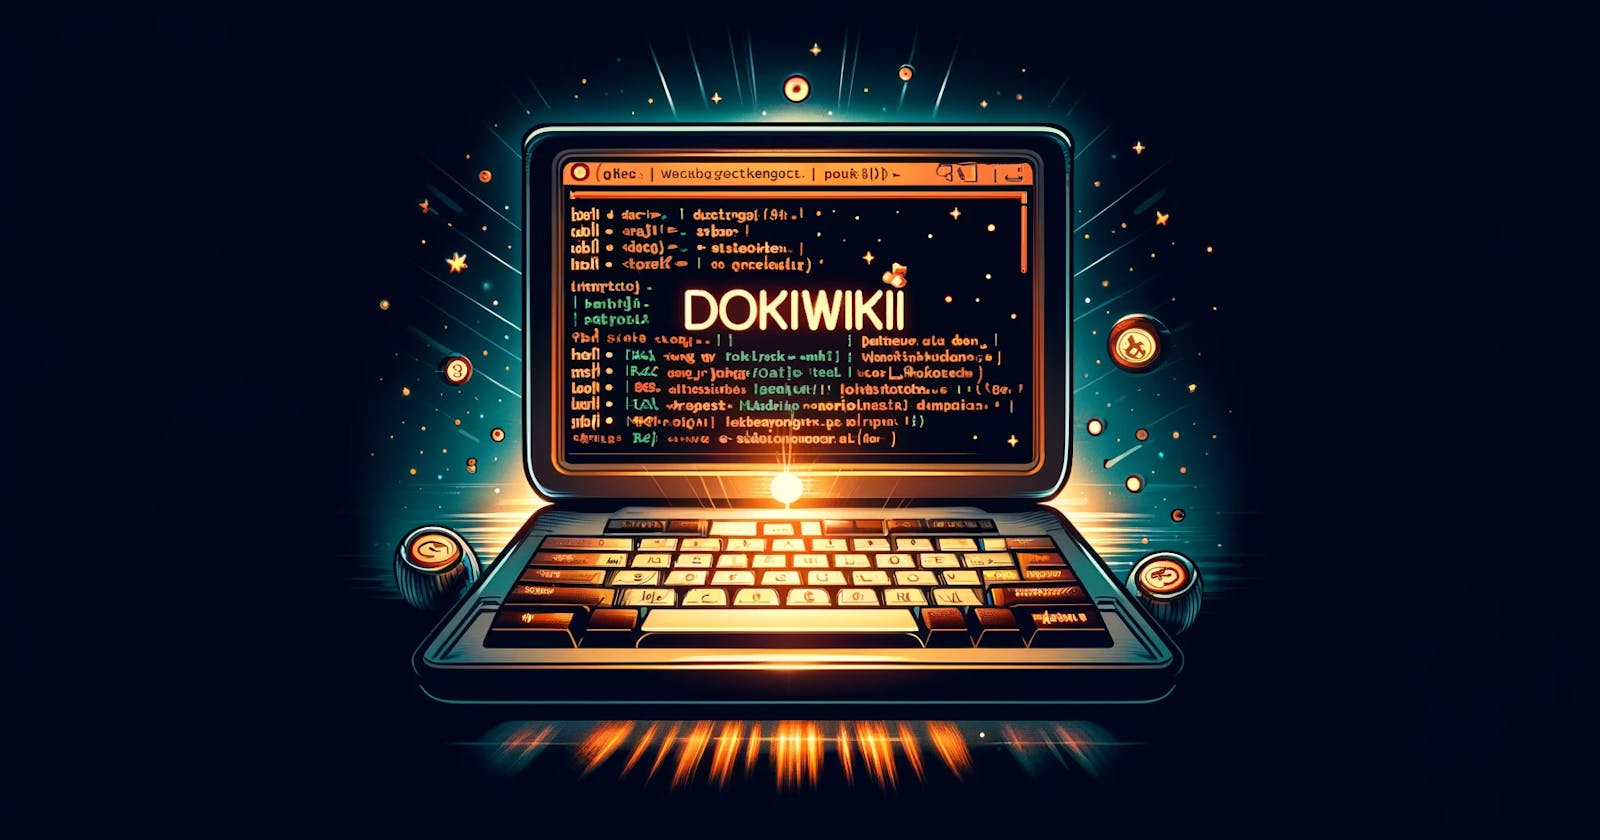 How to install DokuWiki on Ubuntu